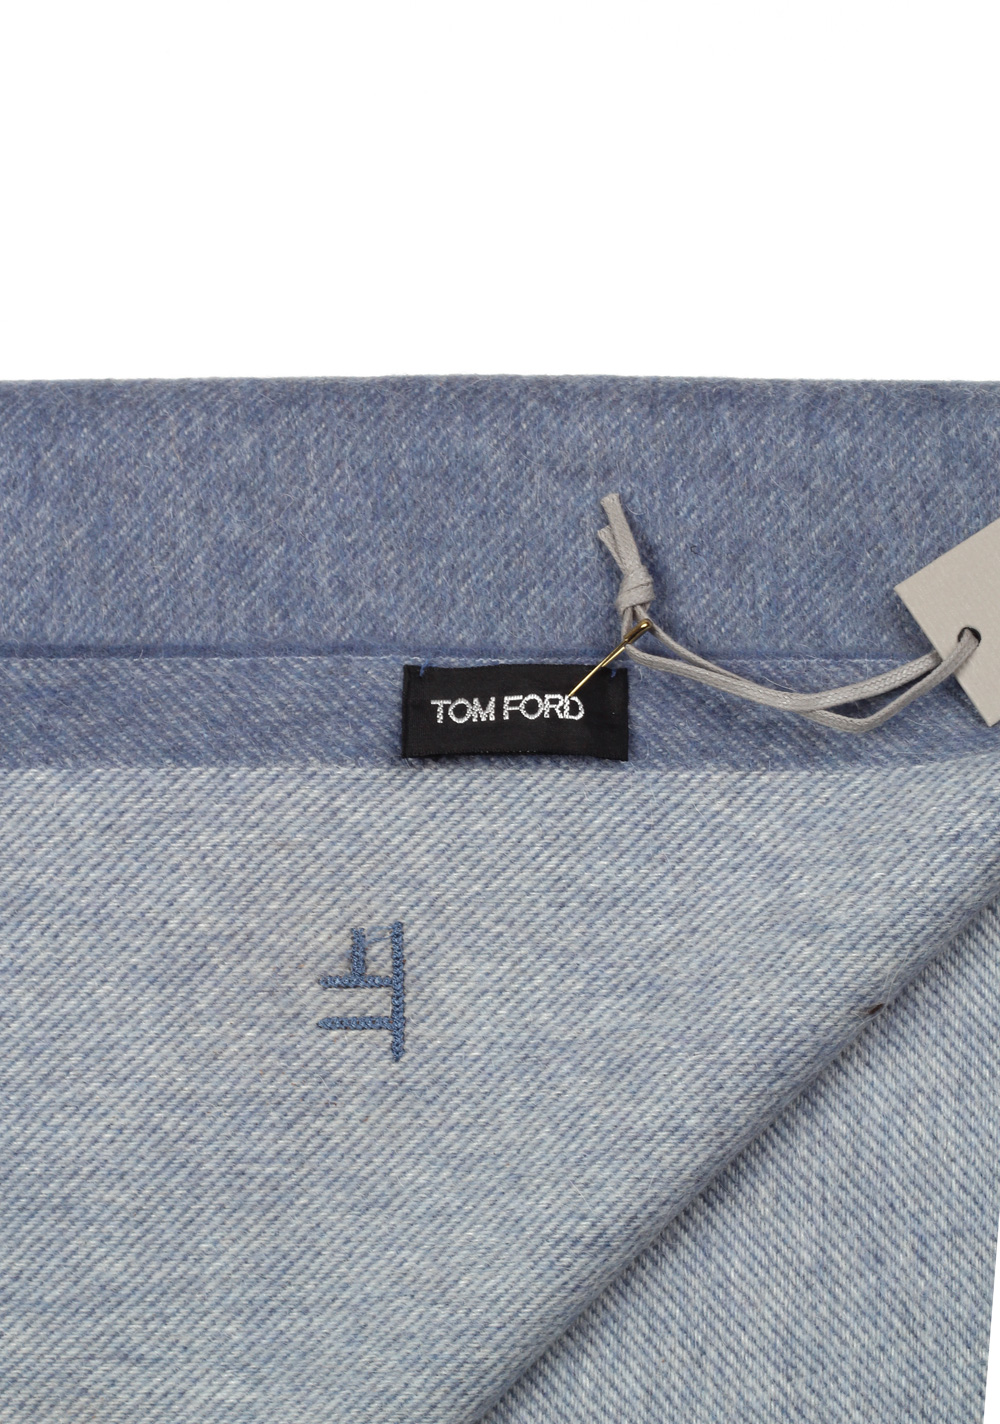 Tom Ford Steel Blue Wool Alpaca Cashmere Signature Scarf 82″ / 11″ | Costume Limité